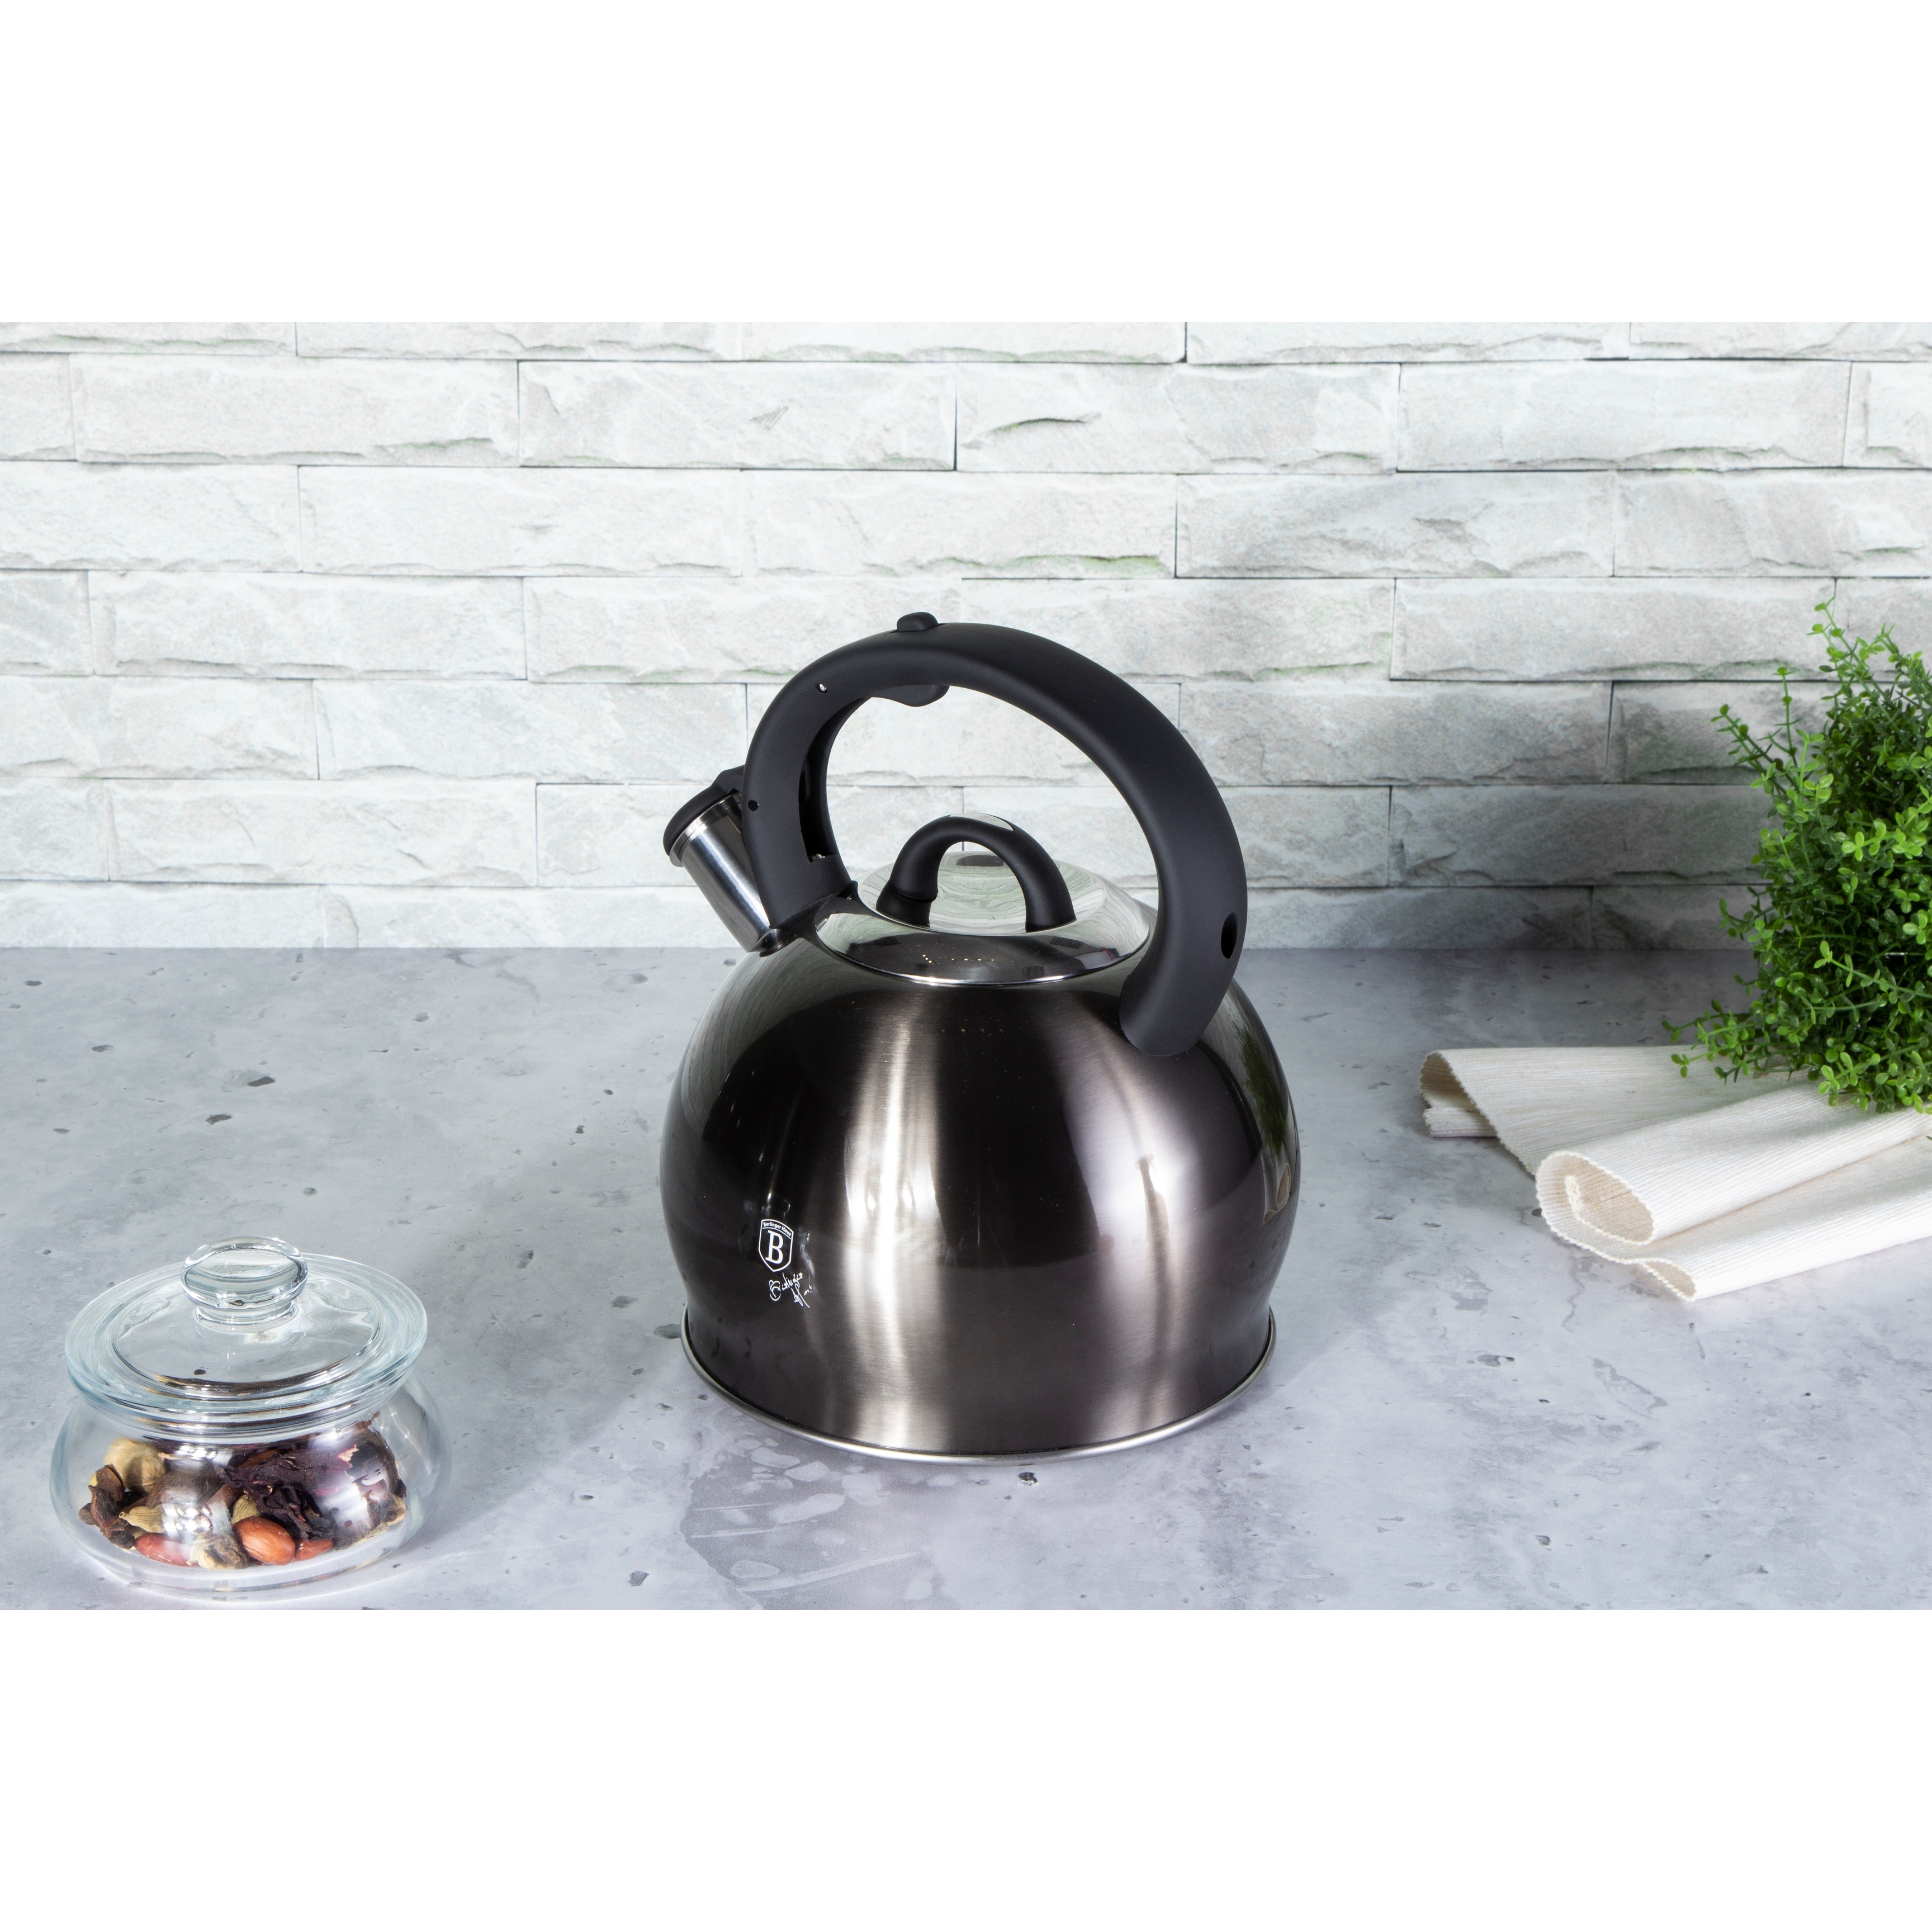 ELITRA HOME Stove Top Whistling Fancy Tea Kettle - Stainless Steel Tea Pot  with Ergonomic Handle - 2.7 Quart / 2.6 Liter,Black